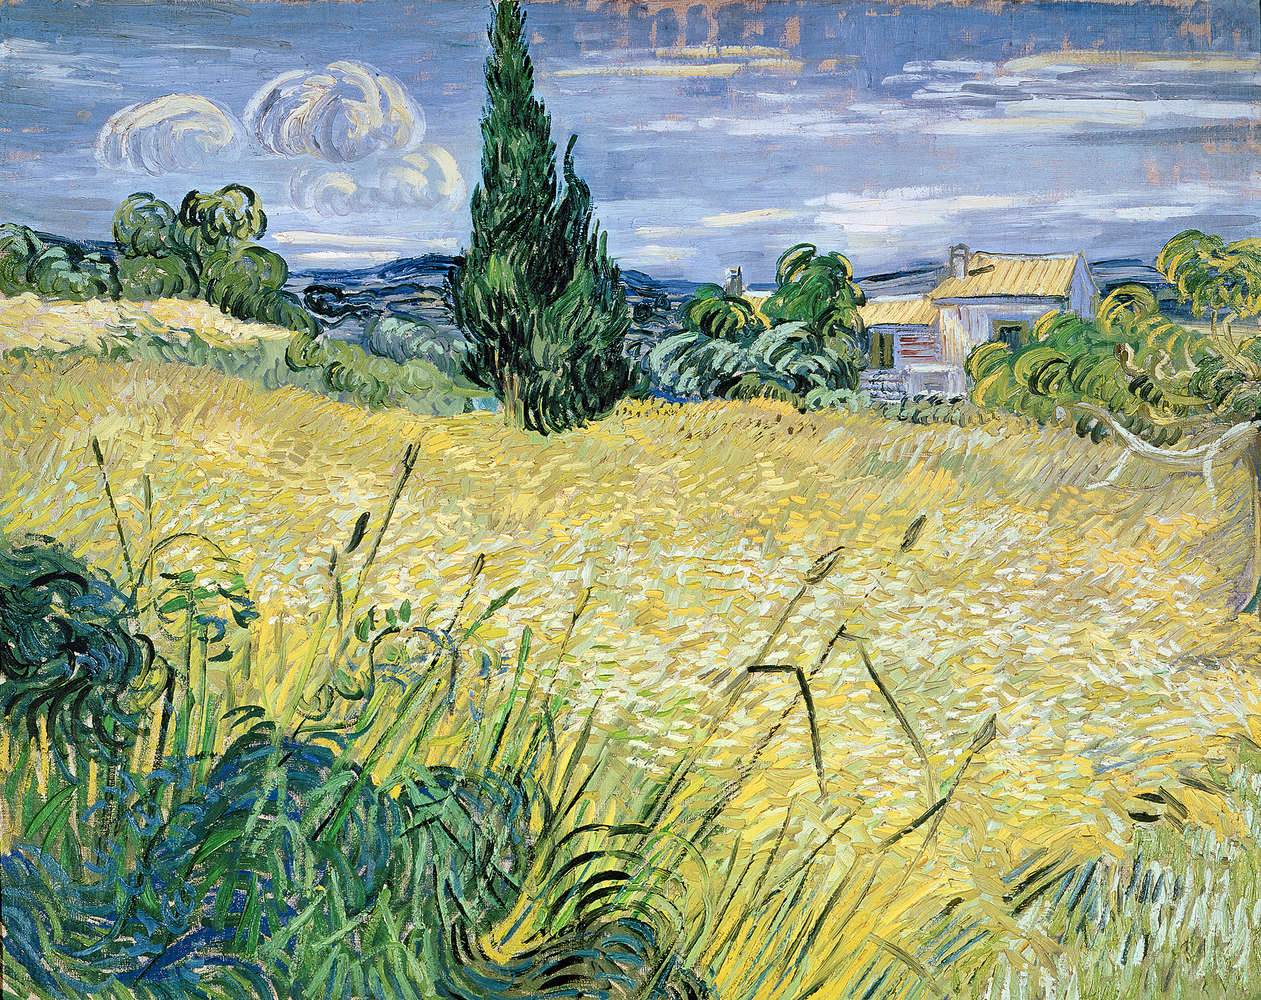             Mural "Campo de trigo verde con ciprés" de Vincent van Gogh
        